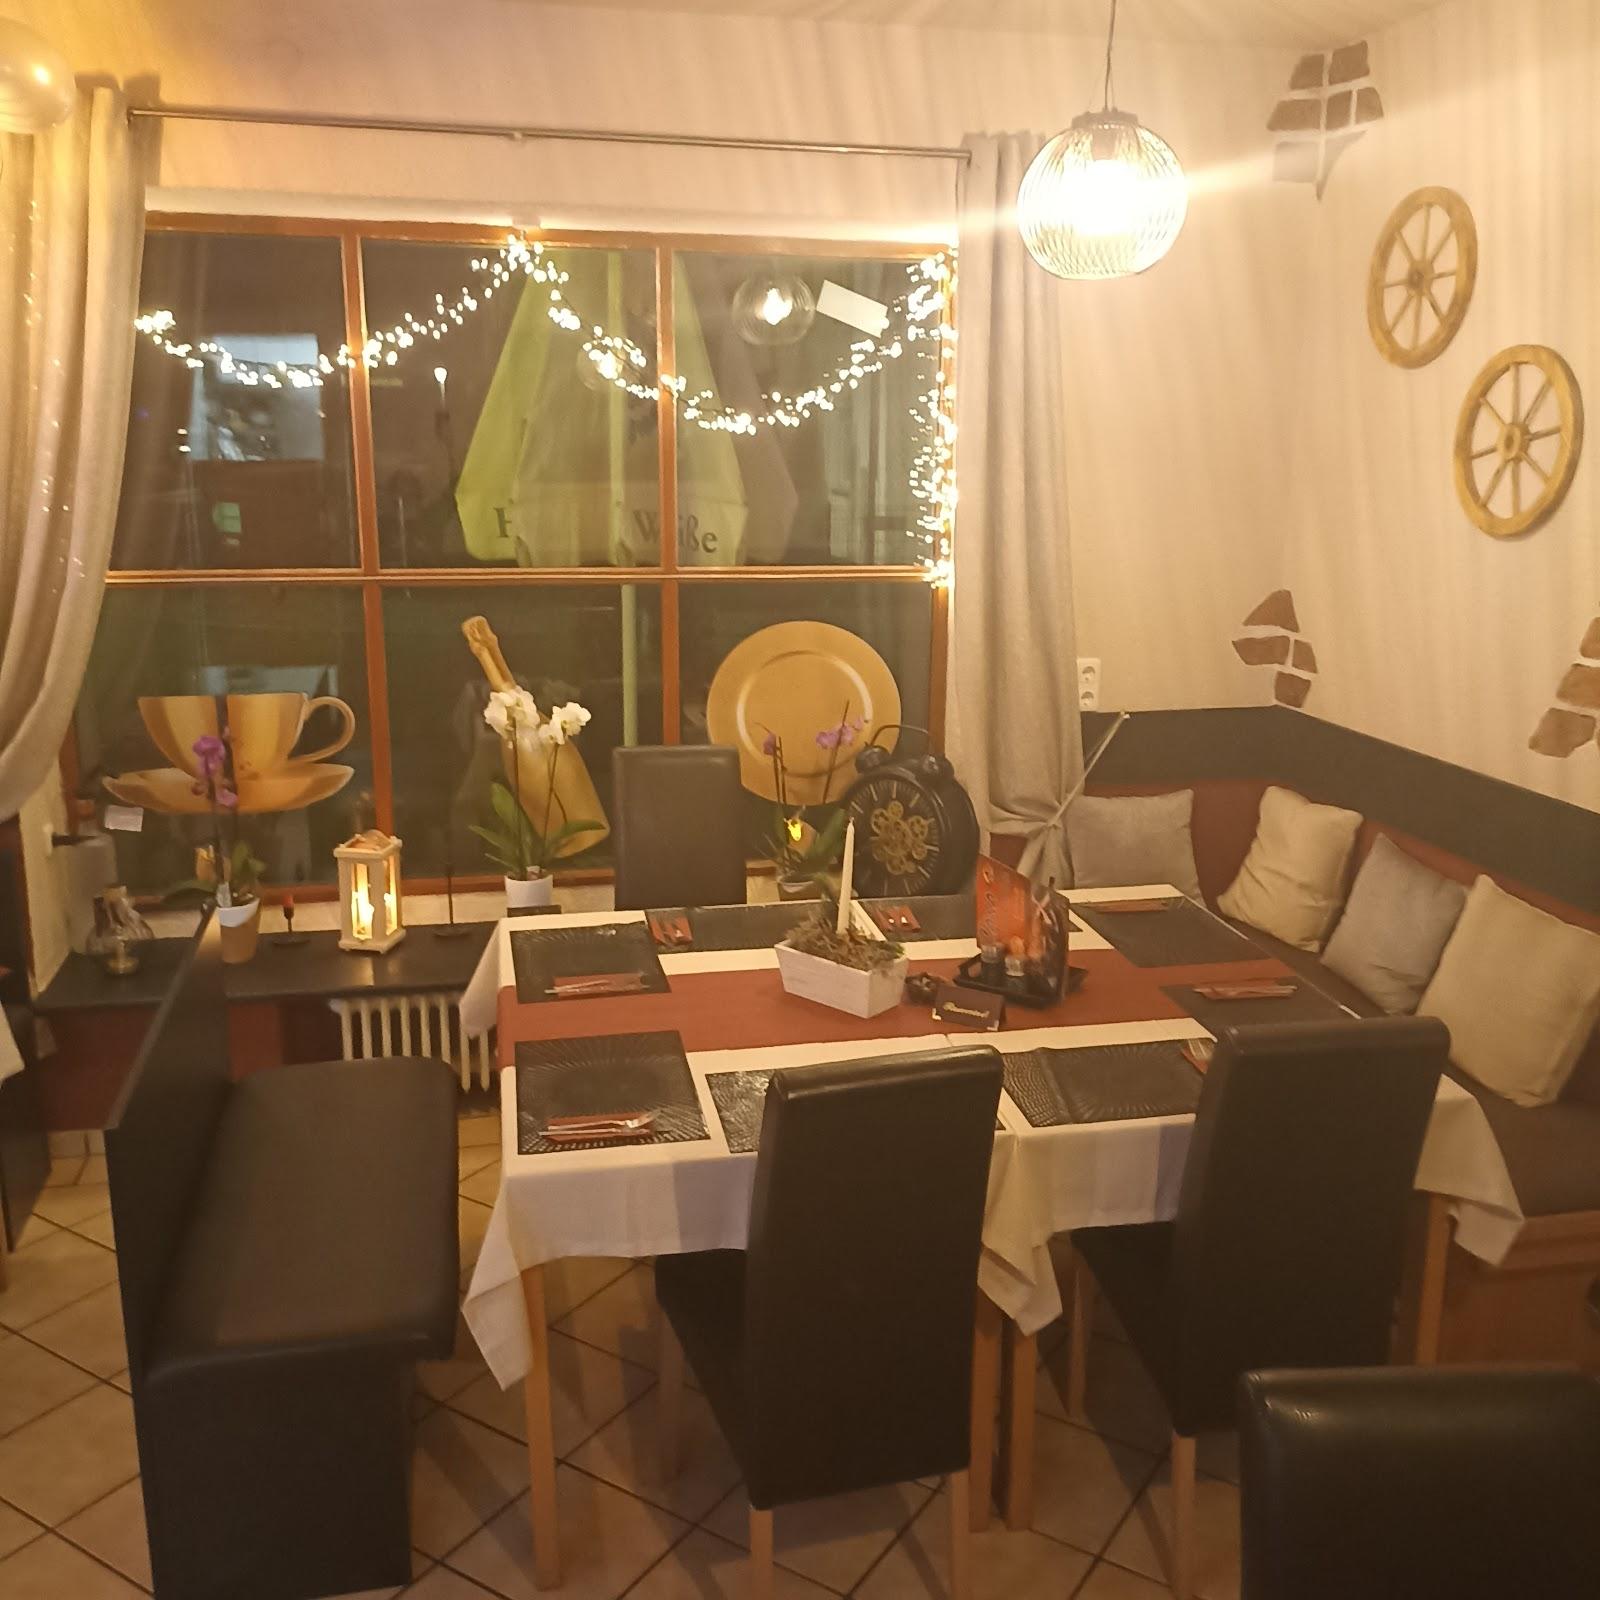 Restaurant "Casa da família" in Großkarolinenfeld